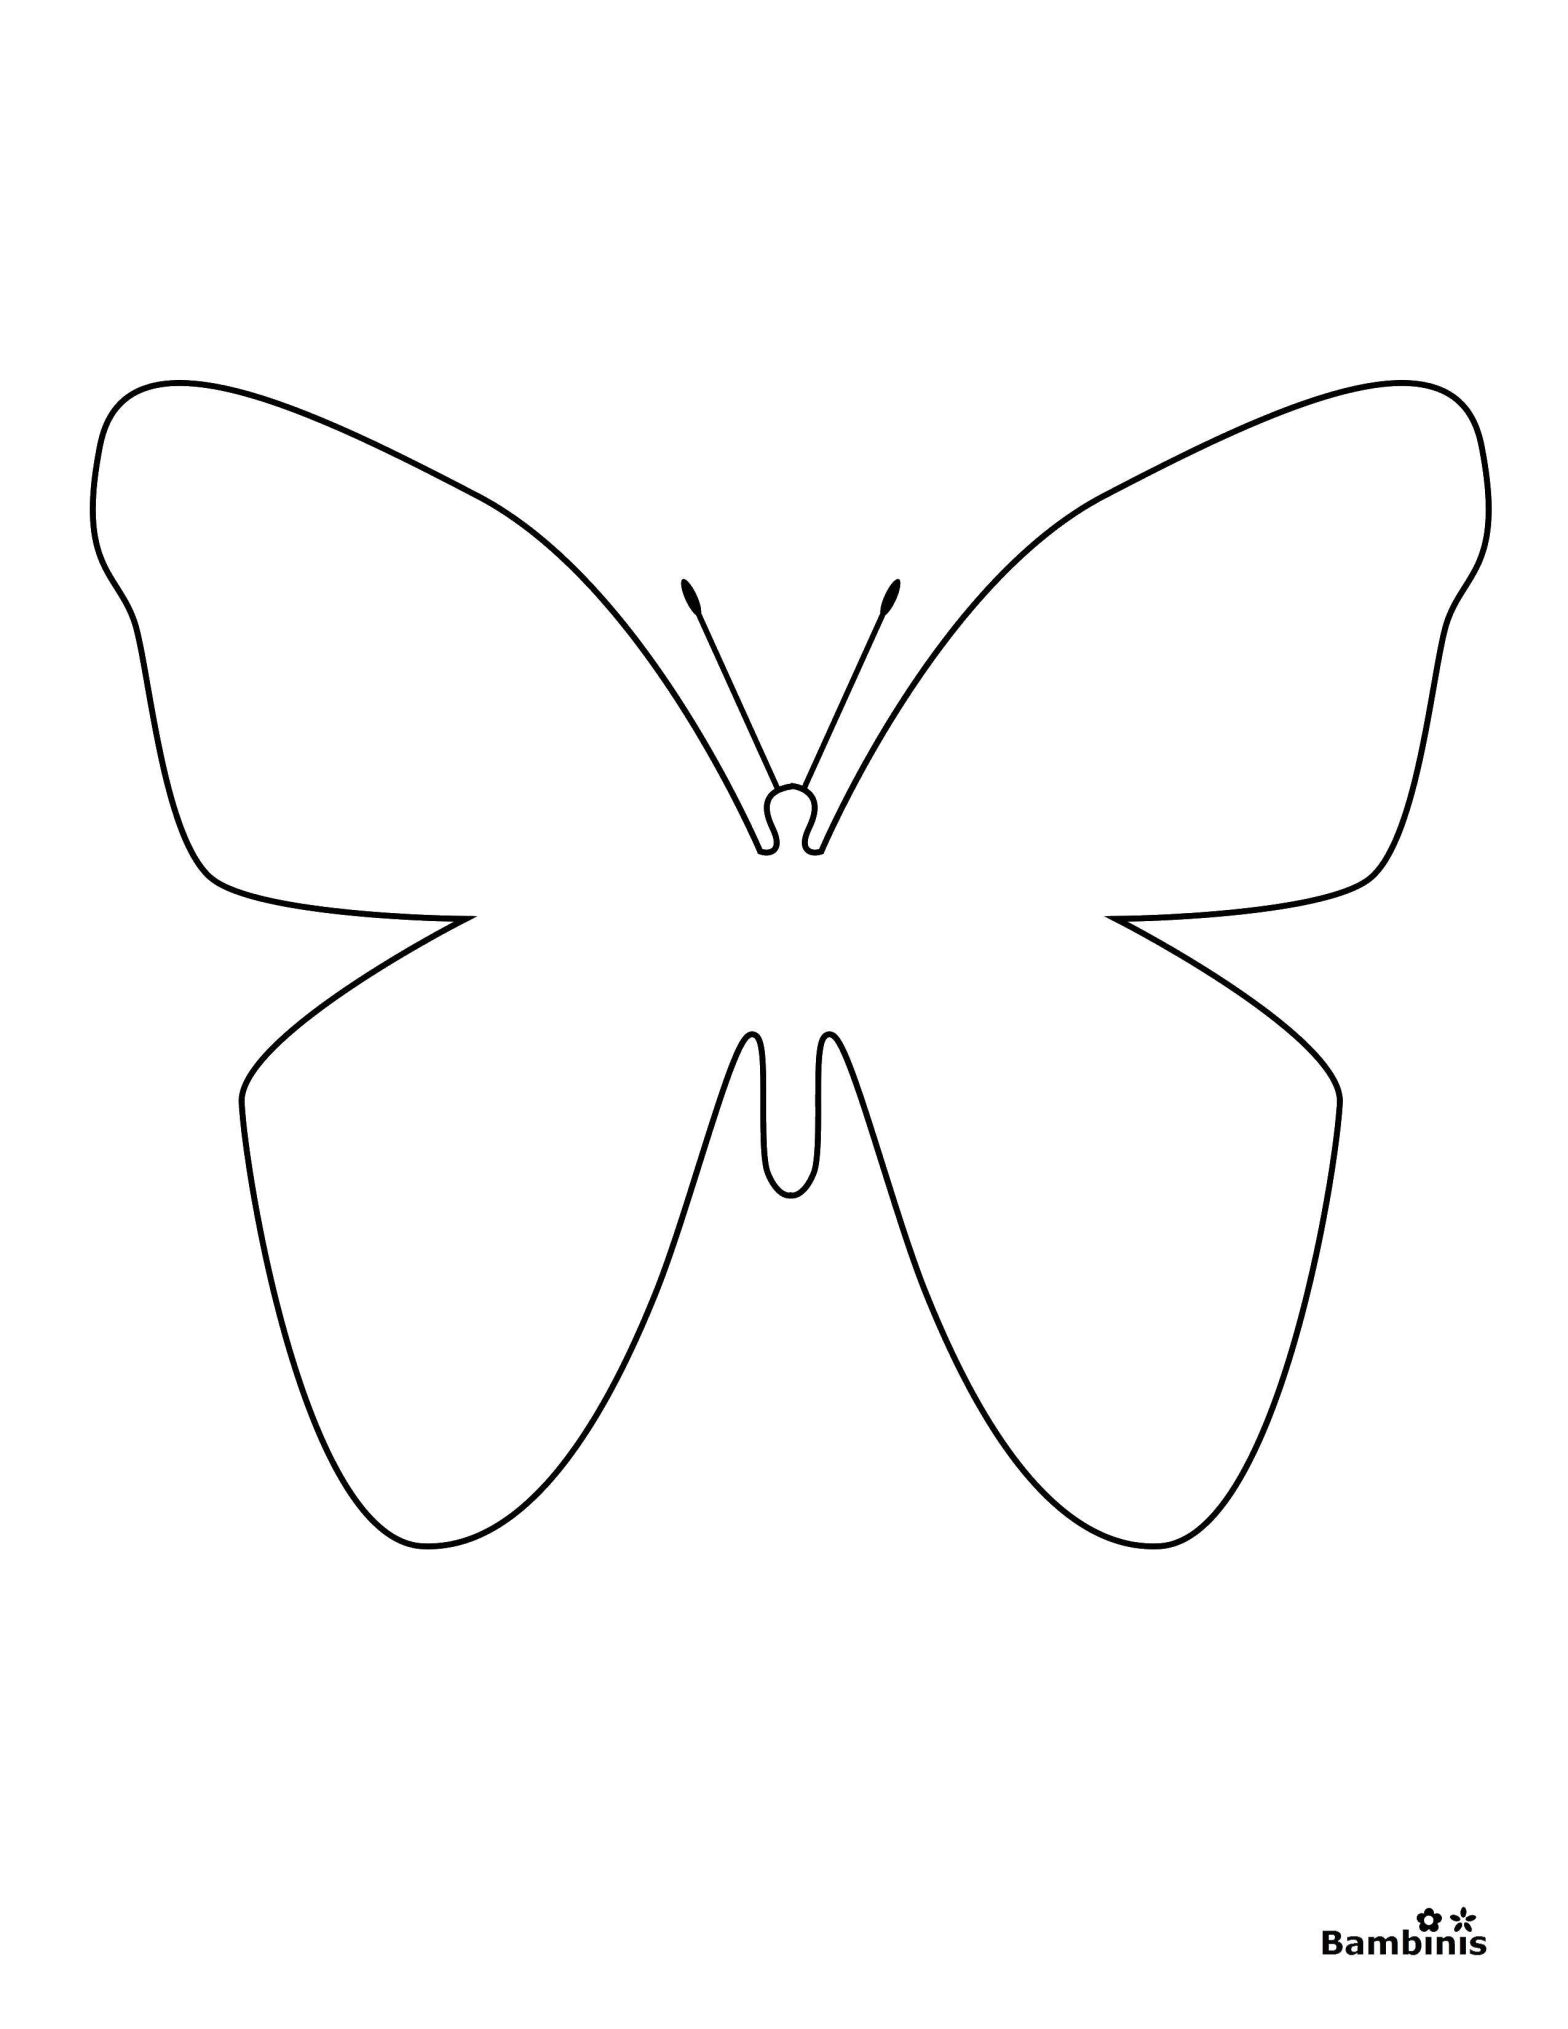 Раскраска на тему насекомых - бабочка, крылья (бабочка, крылья)